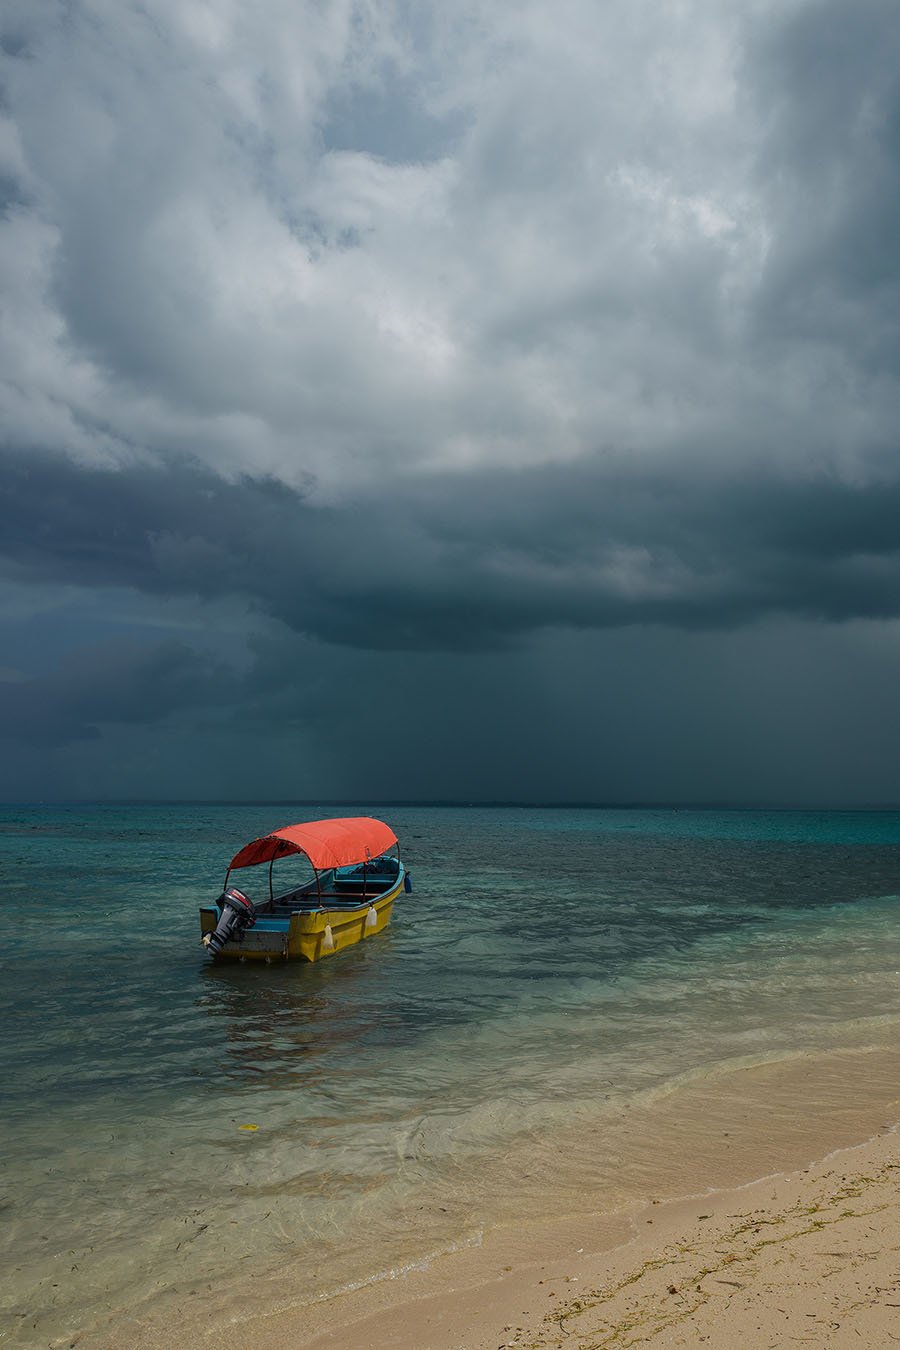 Approaching Storm, Zanzibar